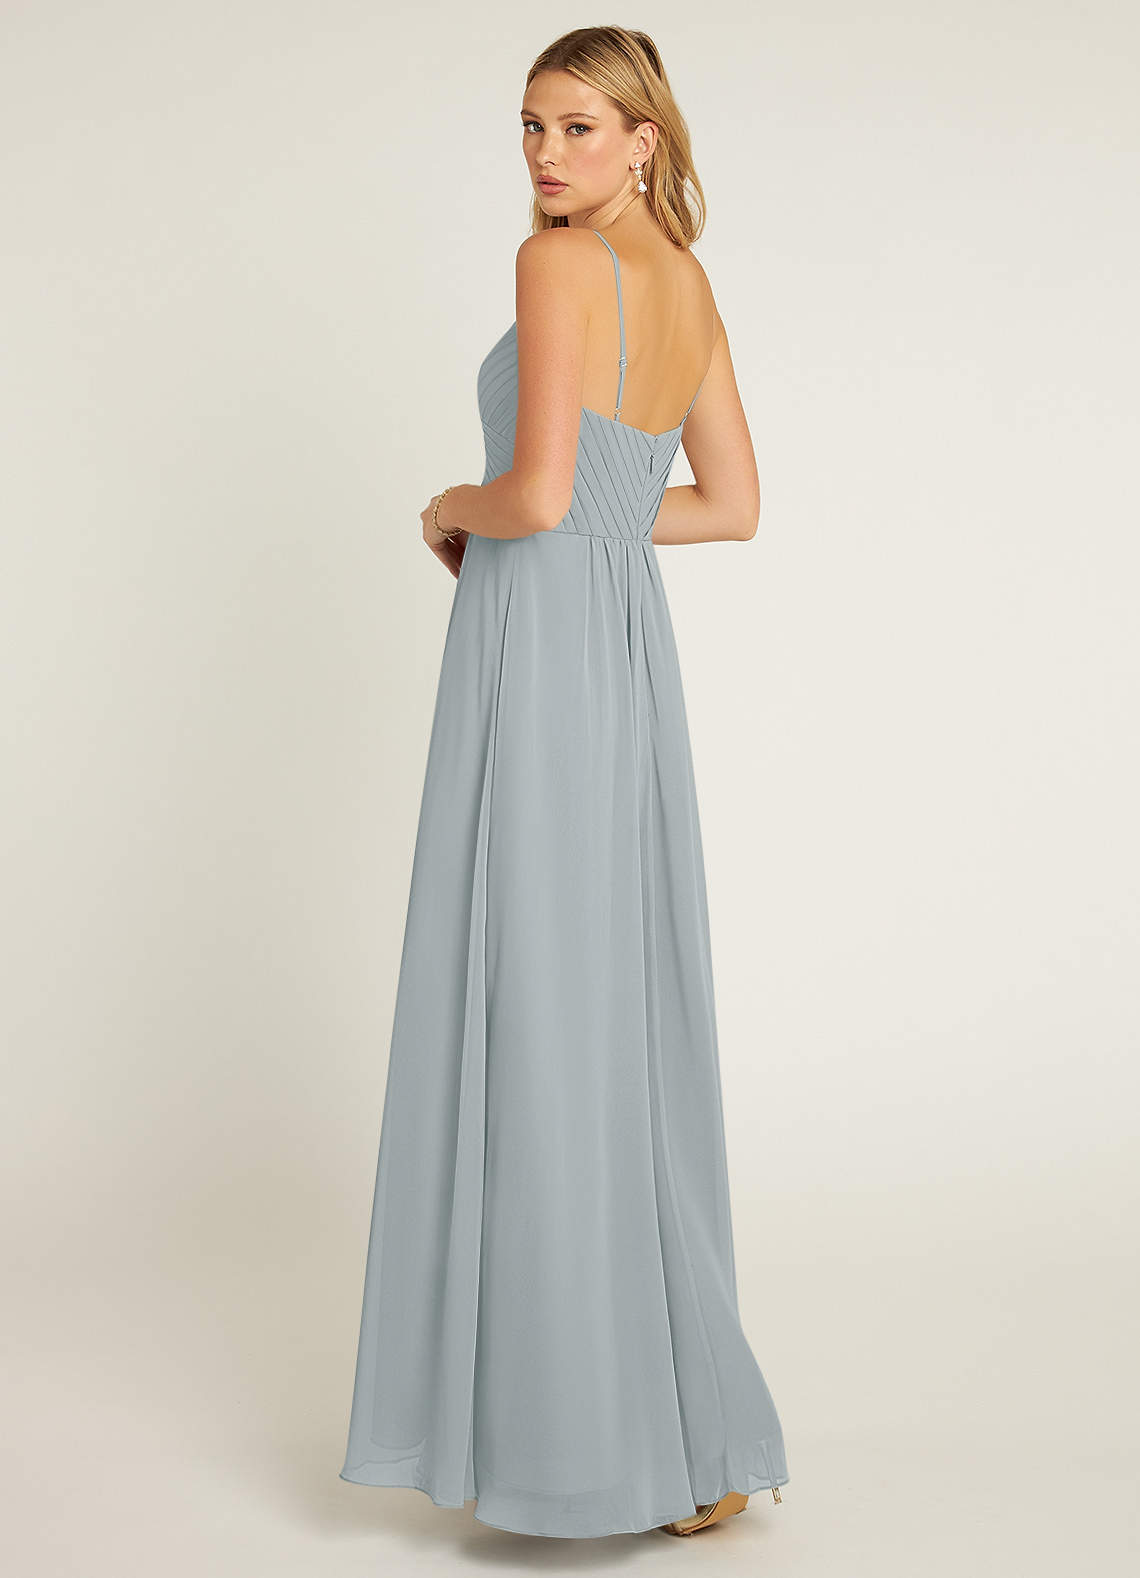 Azazie Shannon Bridesmaid Dresses A-Line Pleated Chiffon Floor-Length Dress image1